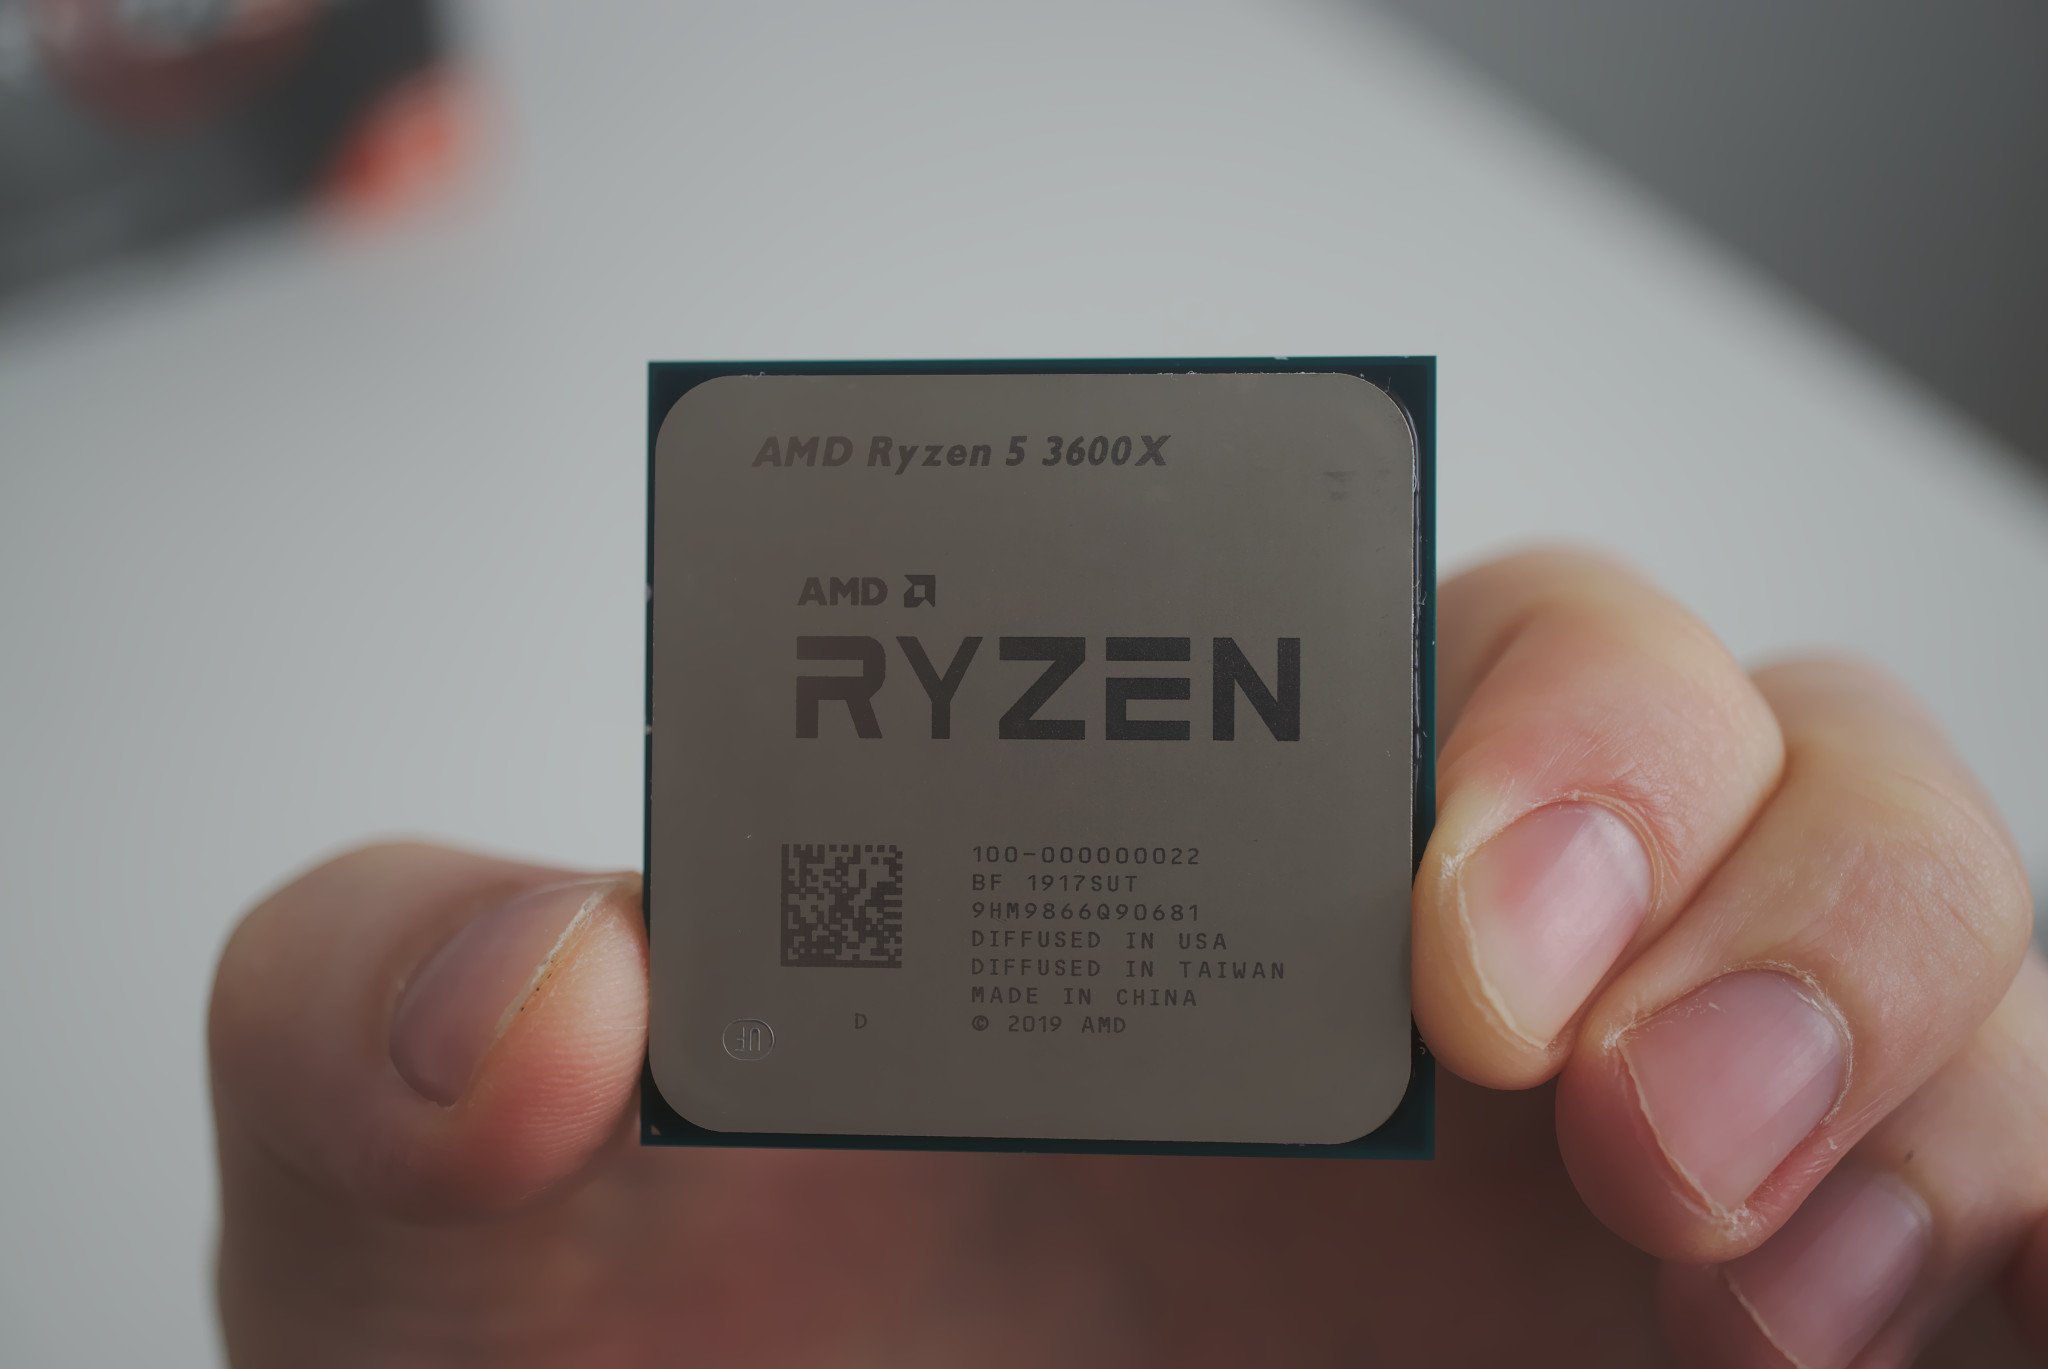 AMD Ryzen 5 3600X review: The new best mid-range CPU | Windows Central